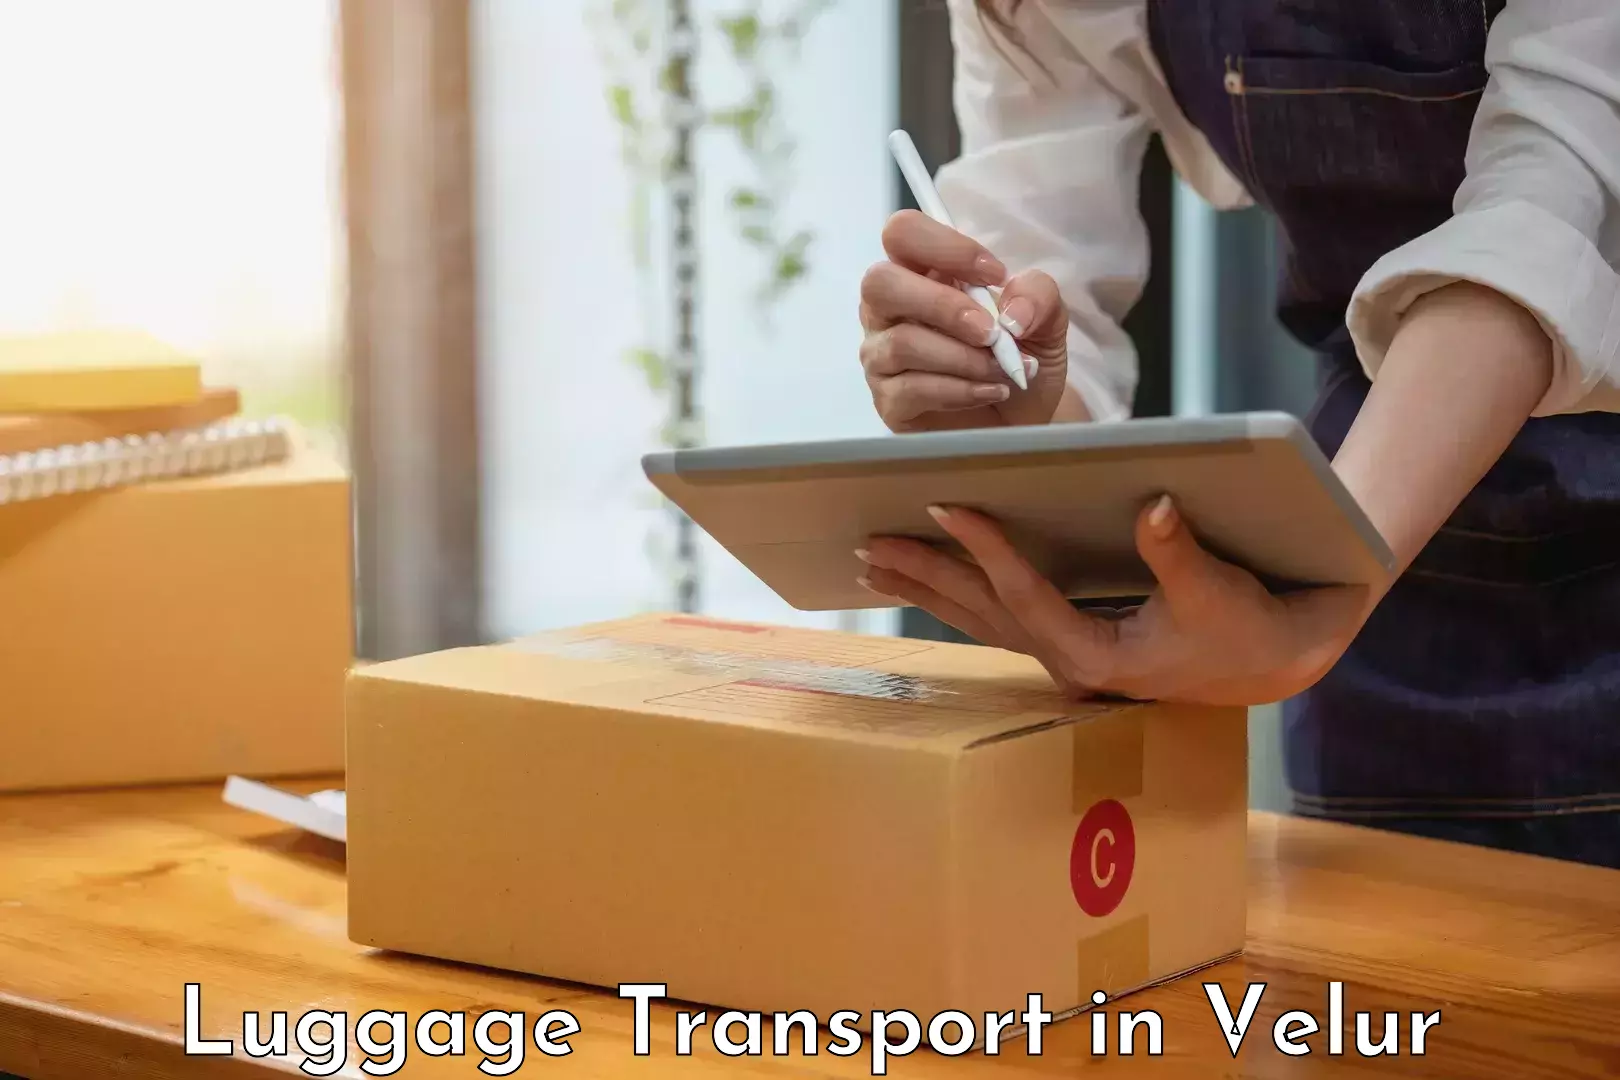 Instant baggage transport quote in Velur